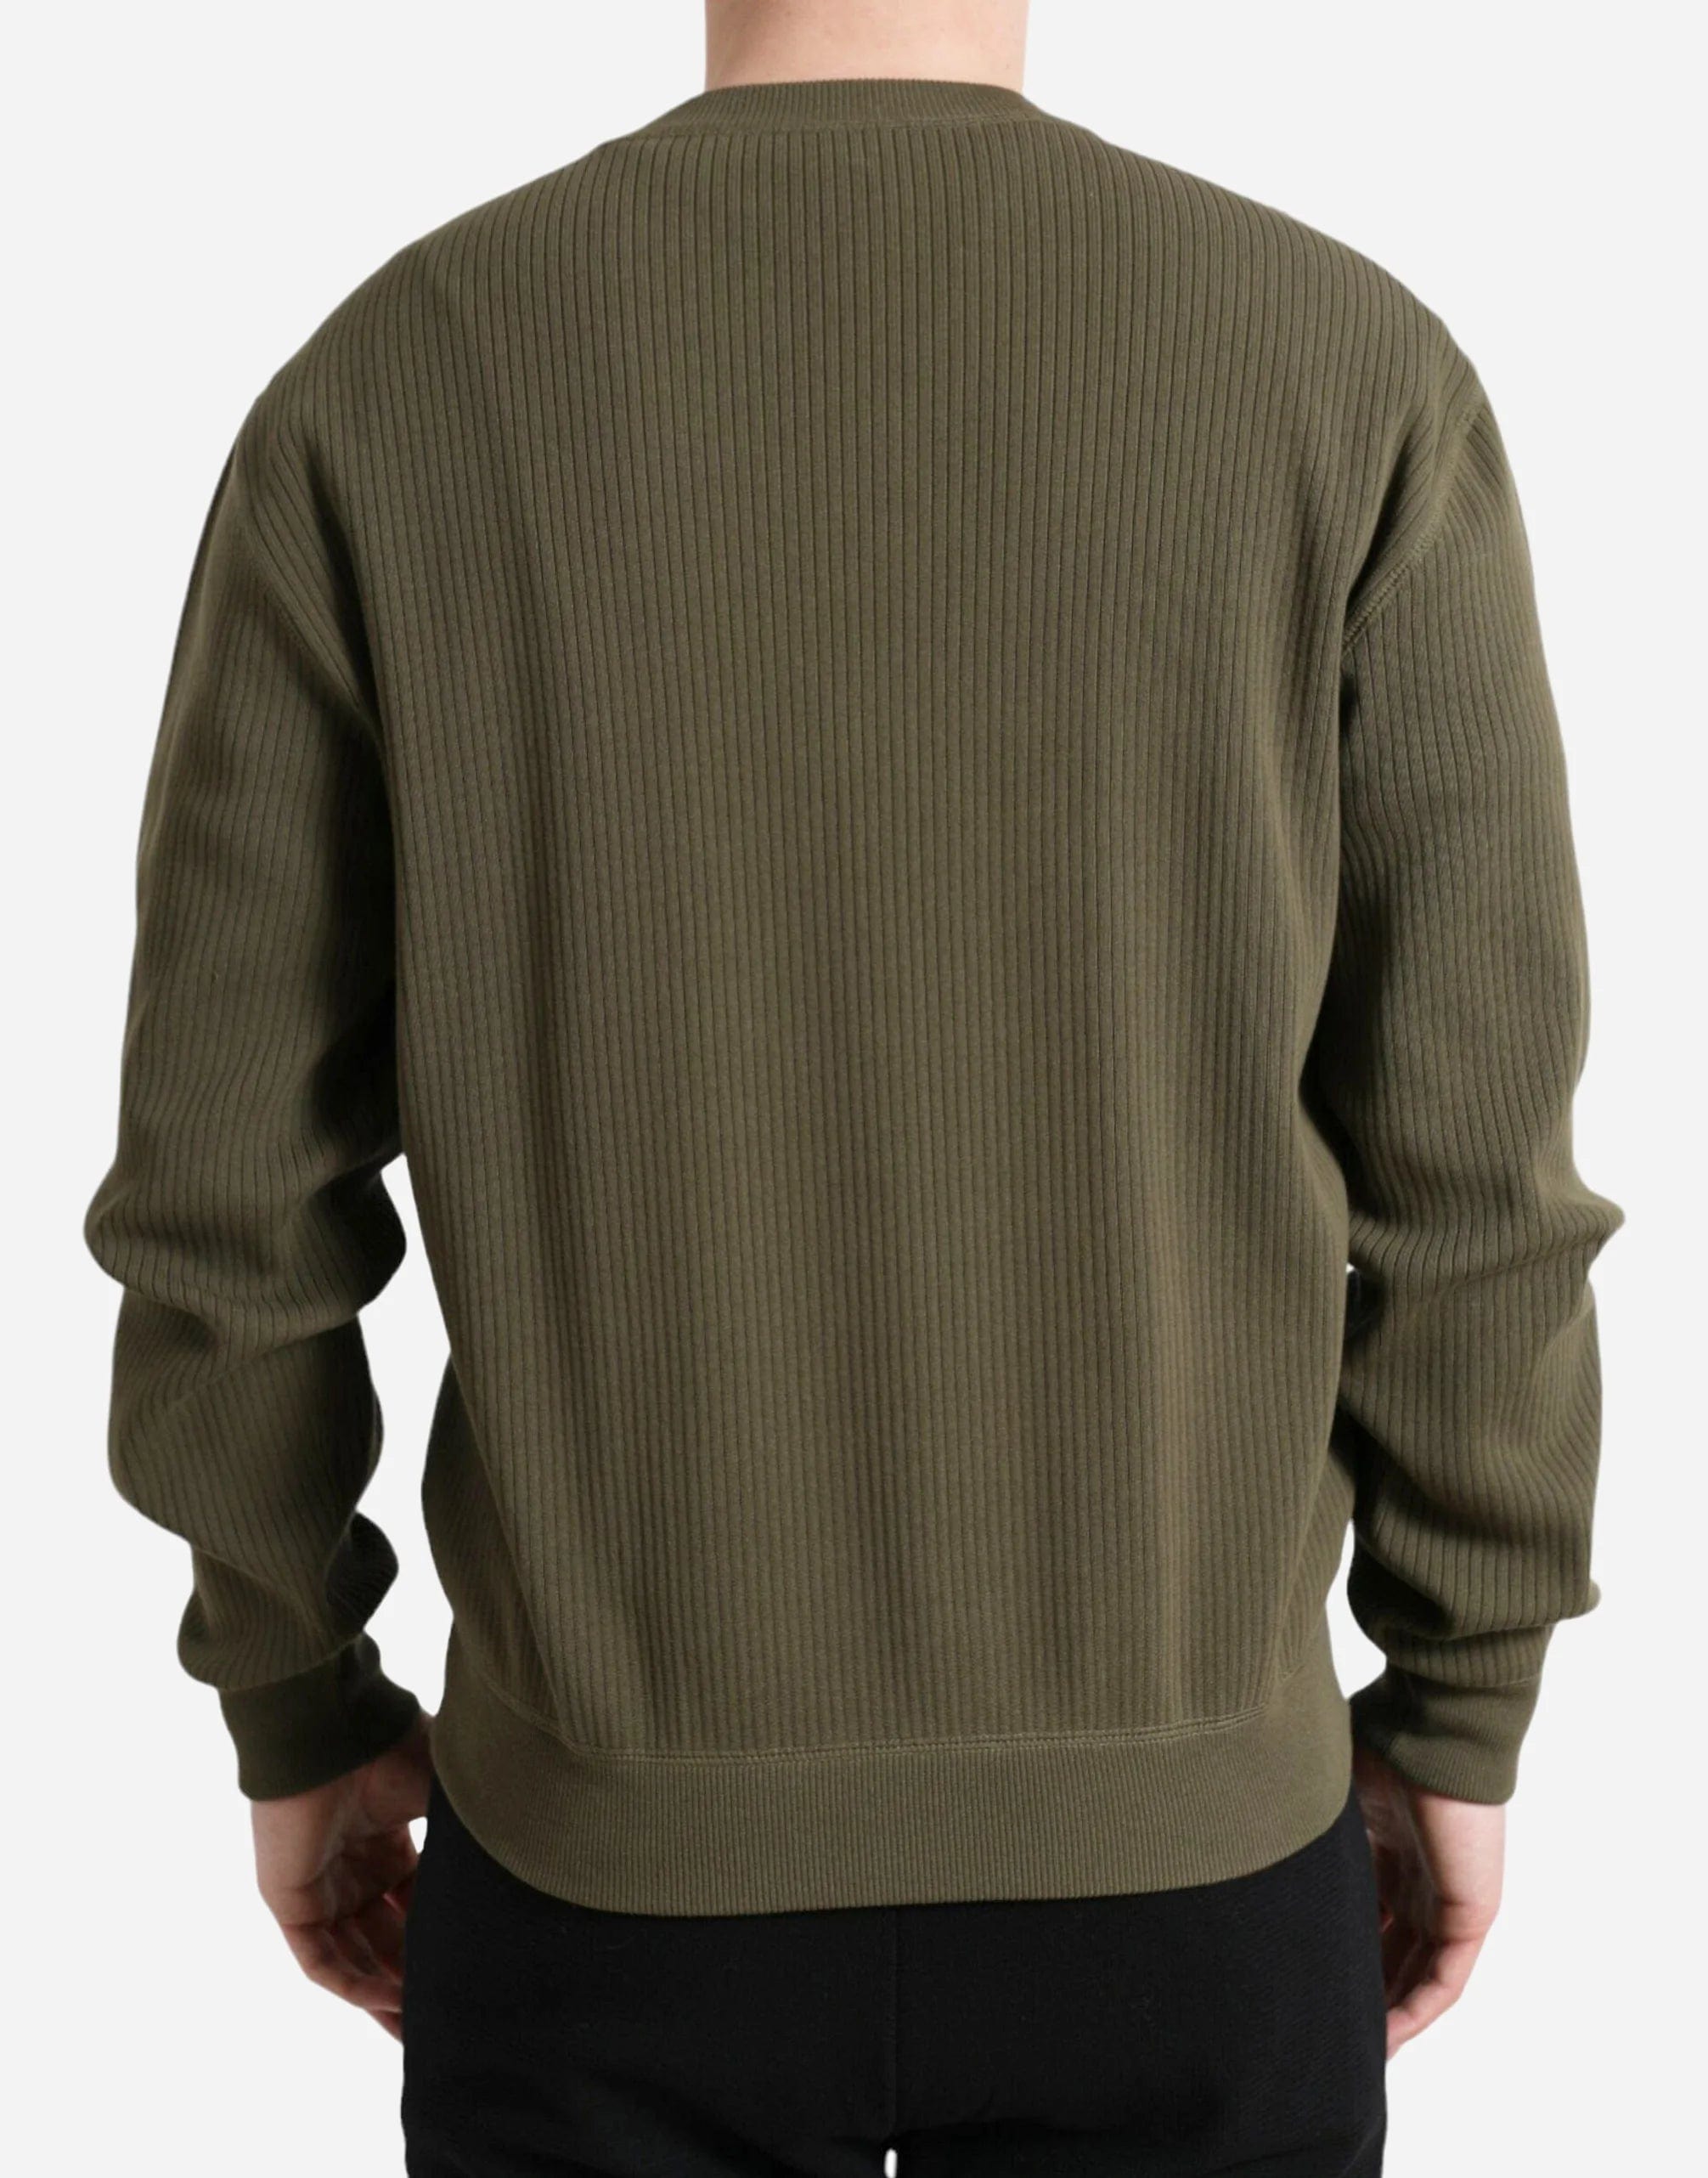 Dolce & Gabbana Ribbed Crewneck Pullover Sweater